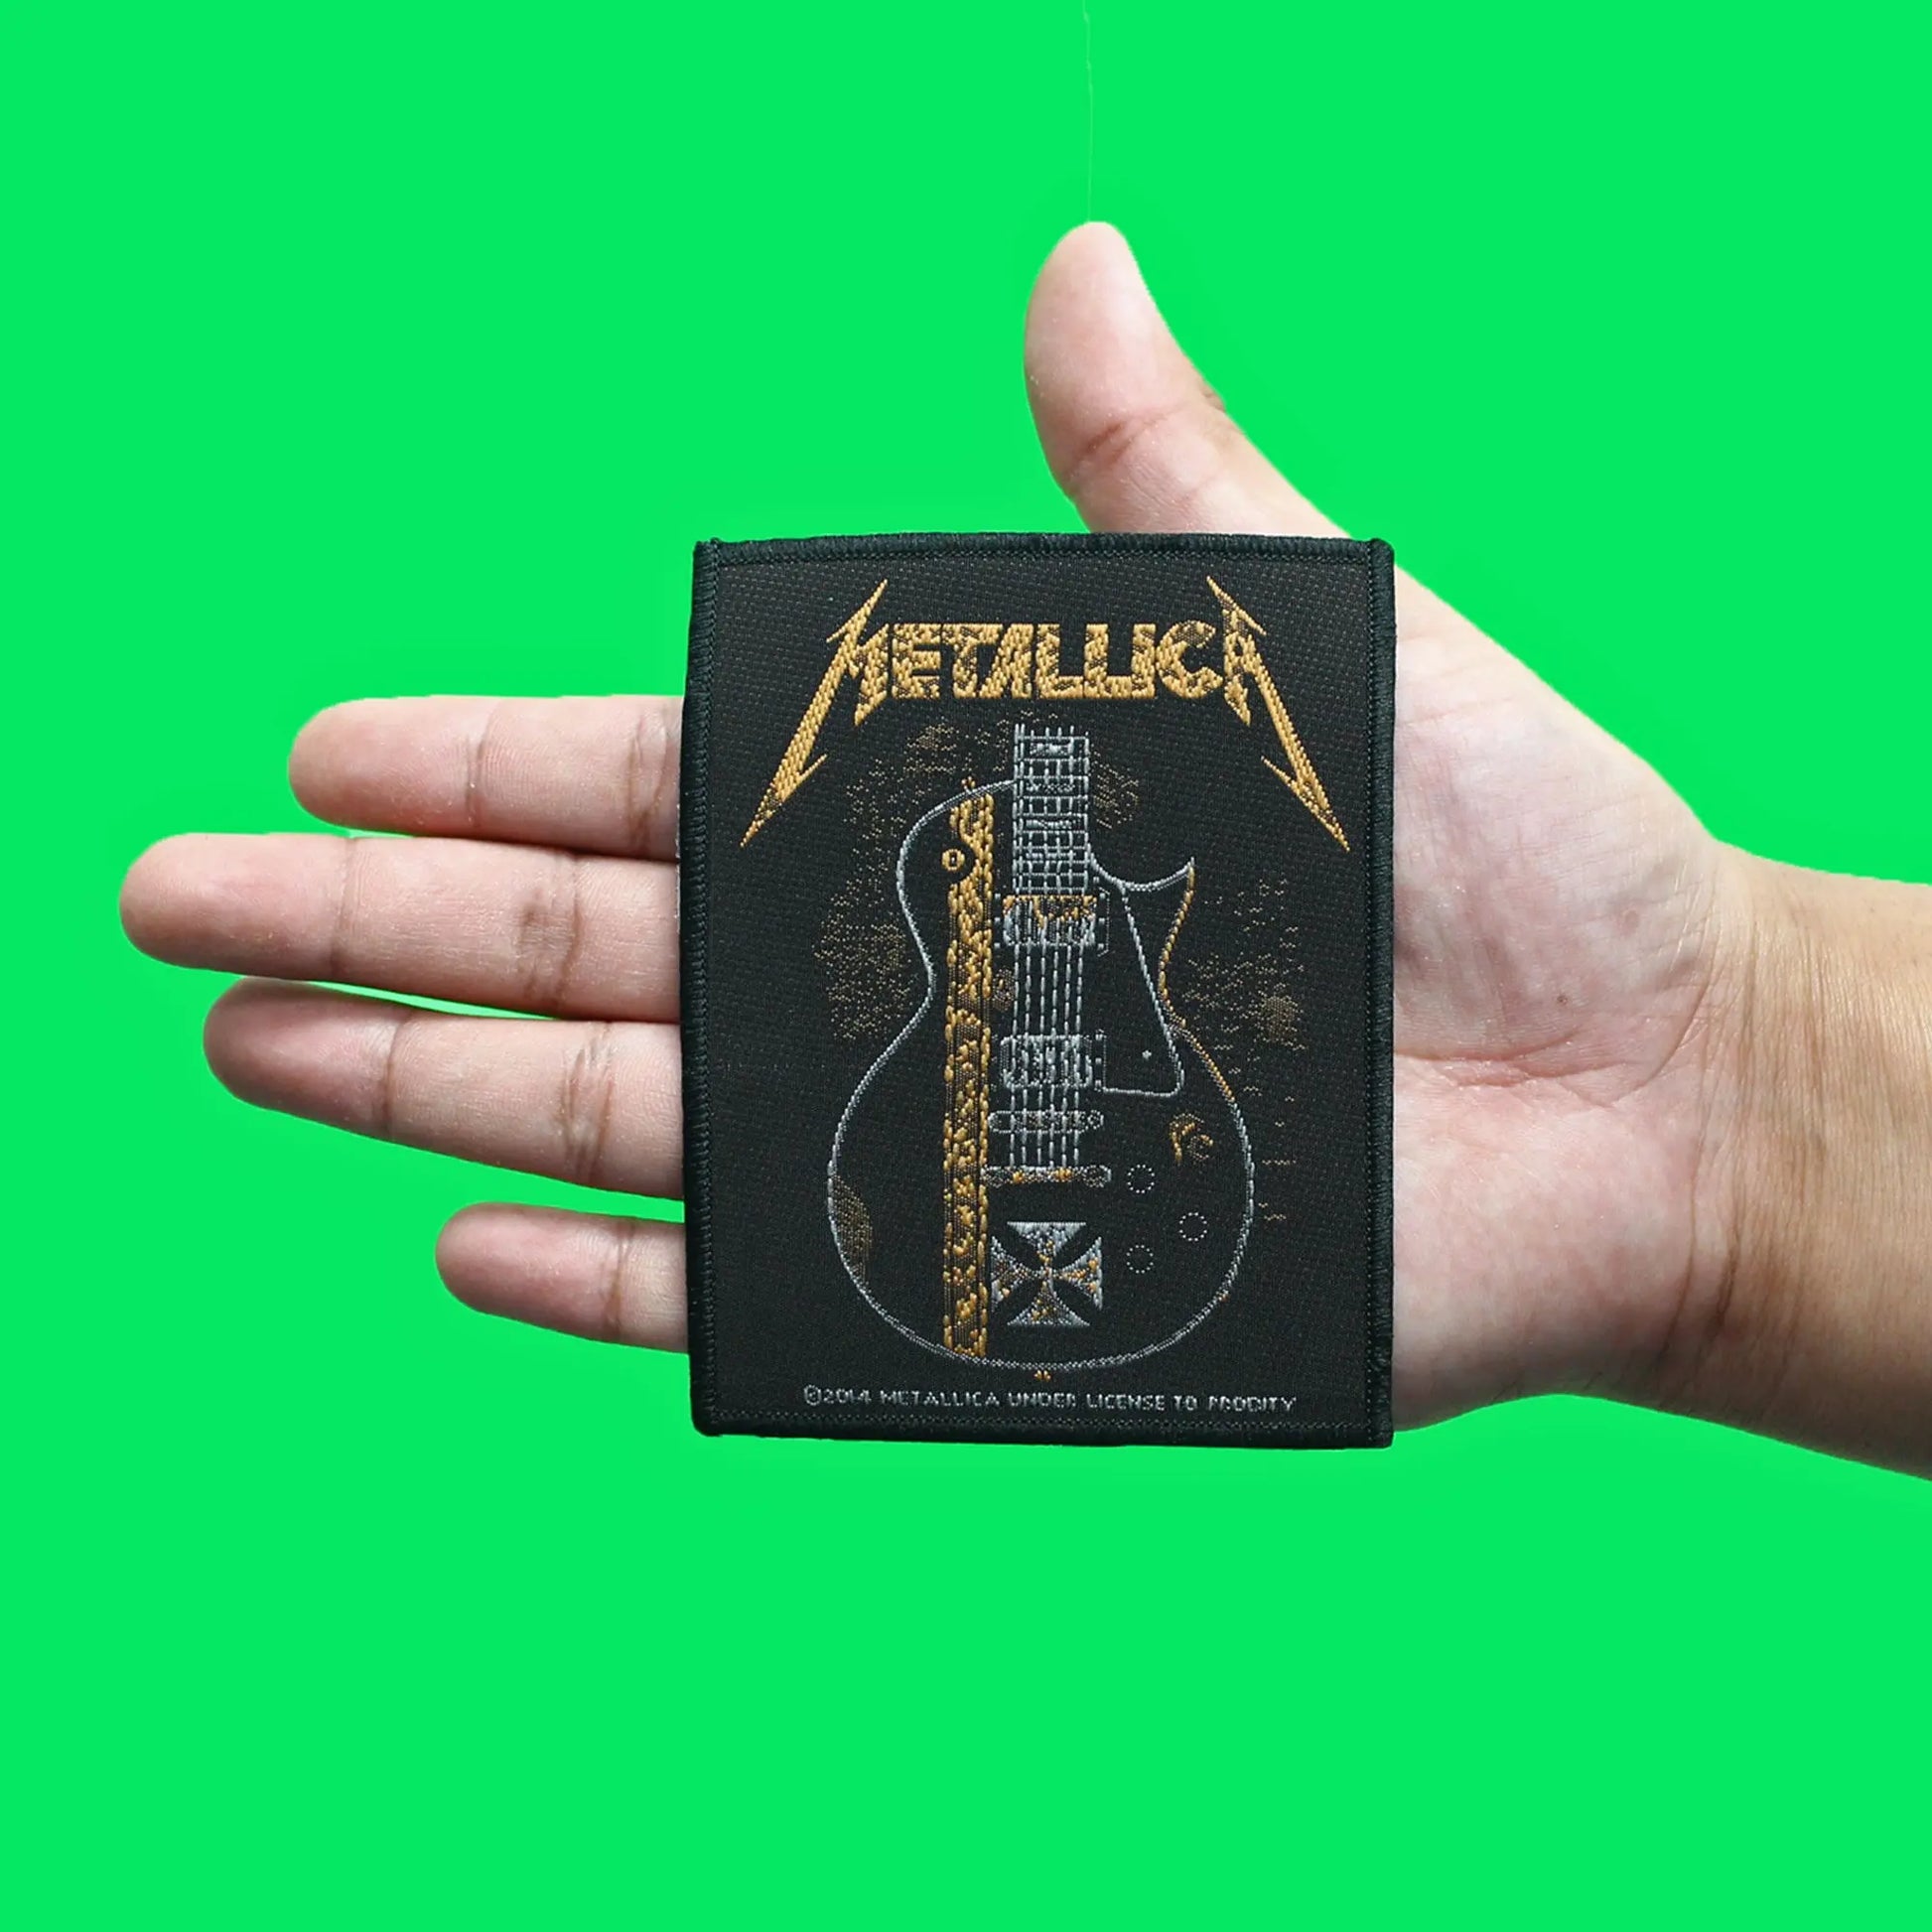 Metallica Hetfield Guitar Art Patch Heavy Metal Band Woven Iron On